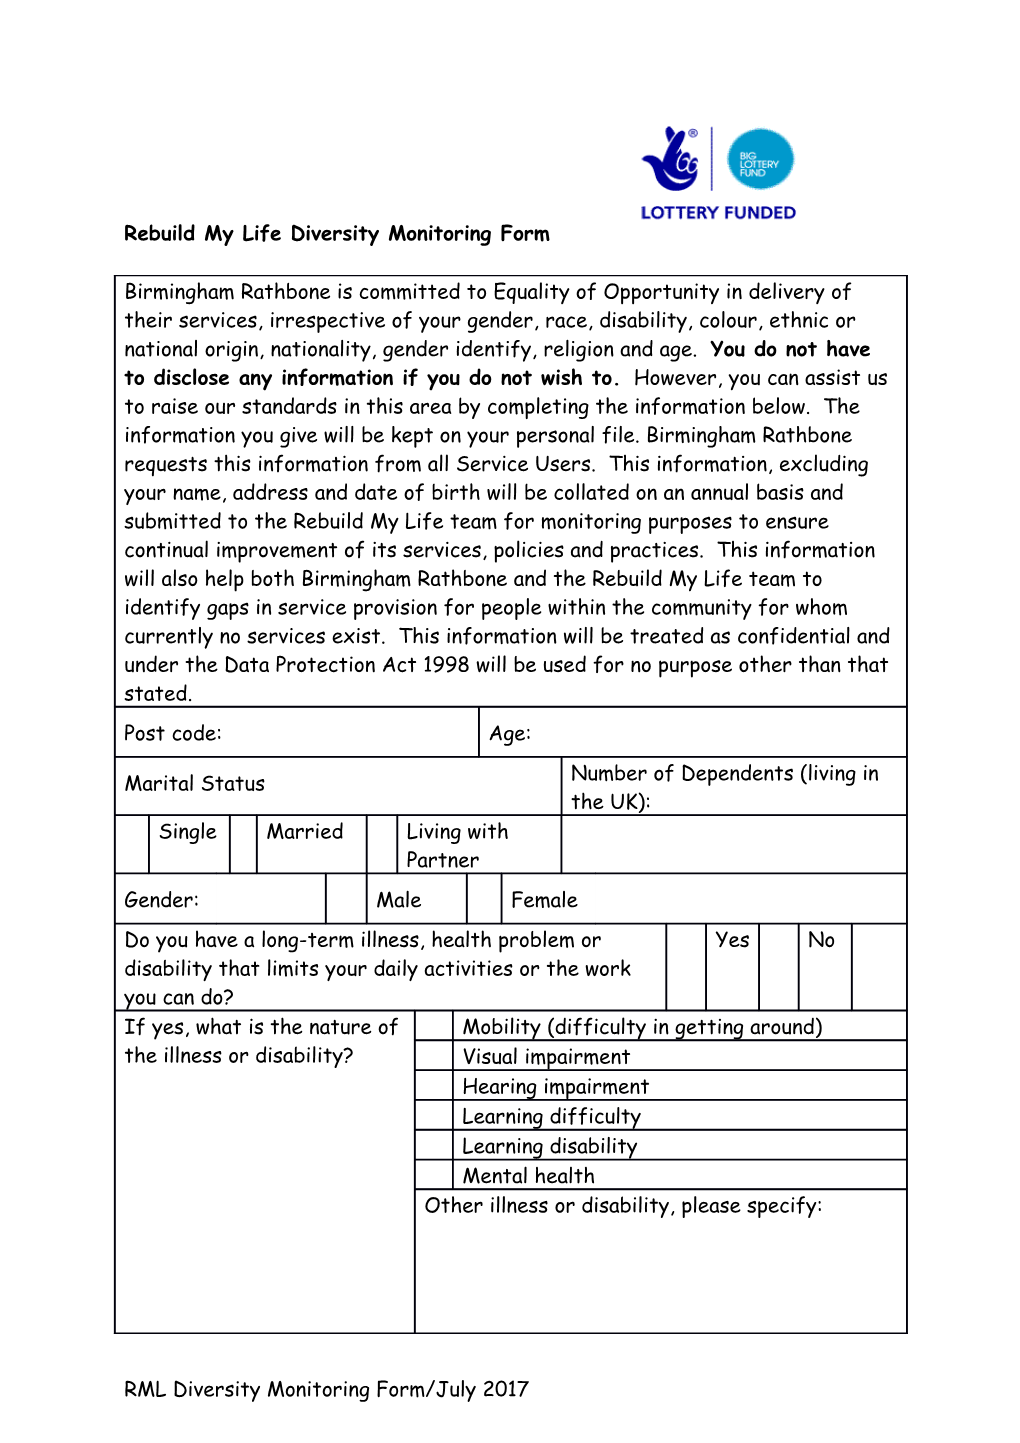 RML Diversity Monitoring Form/July 2017